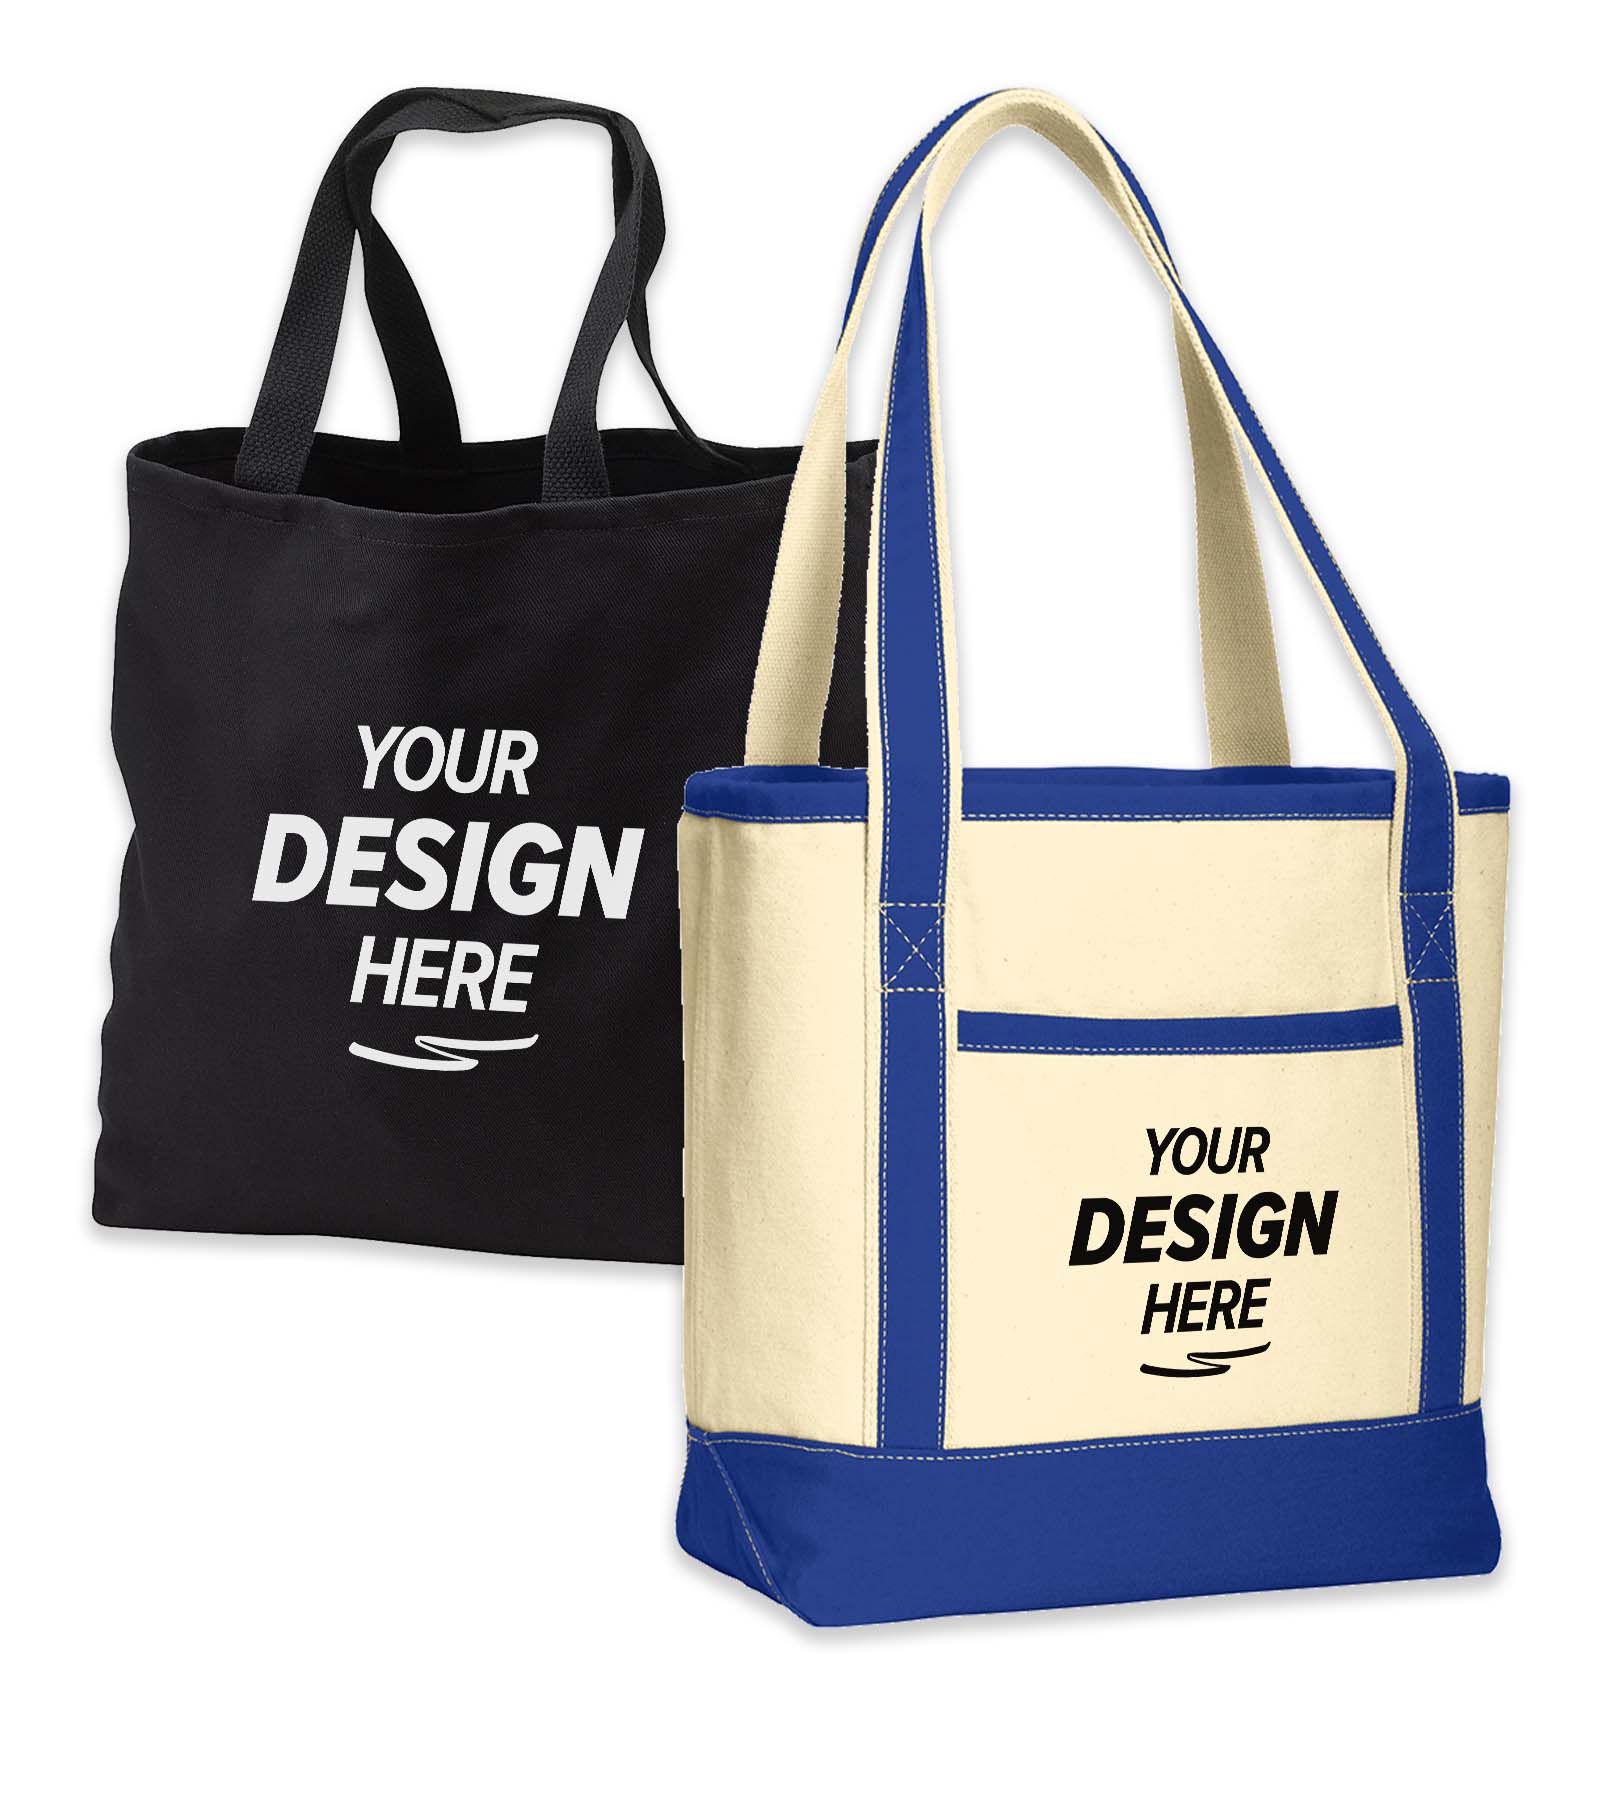 Personalised Tote Bags - Tote Bag Printing Cheap | TeamShirts